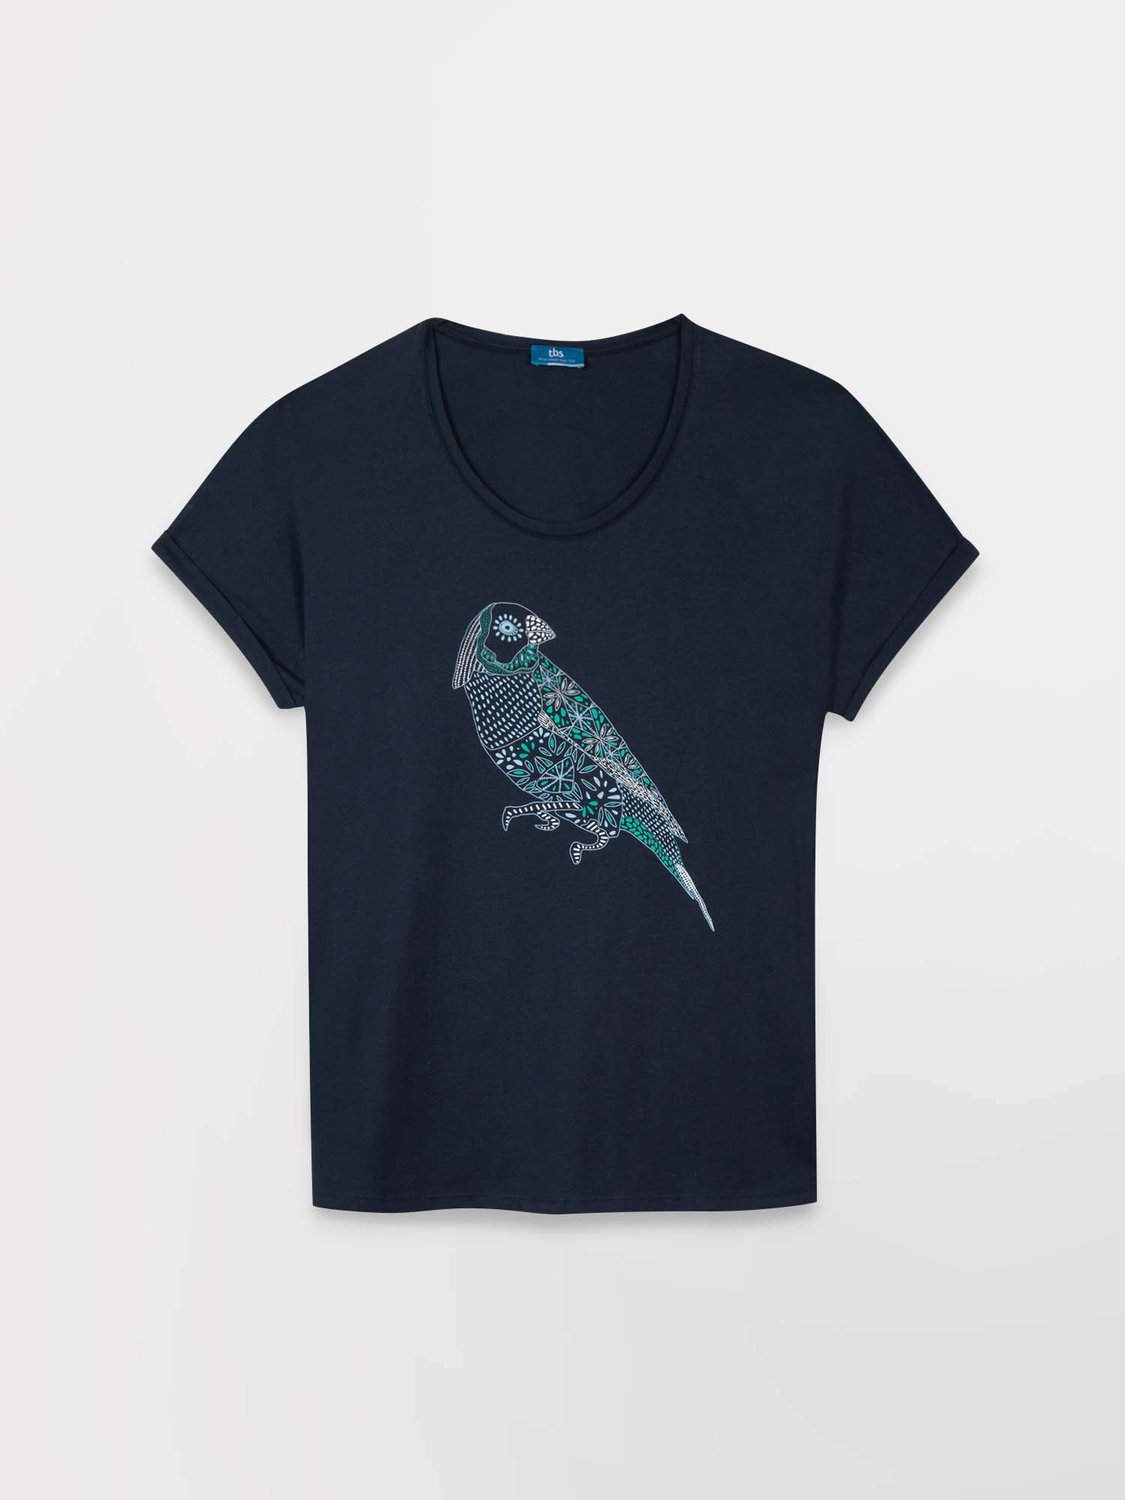 Tee Shirt Femme Coton Biologique Motif Perroquet Marine